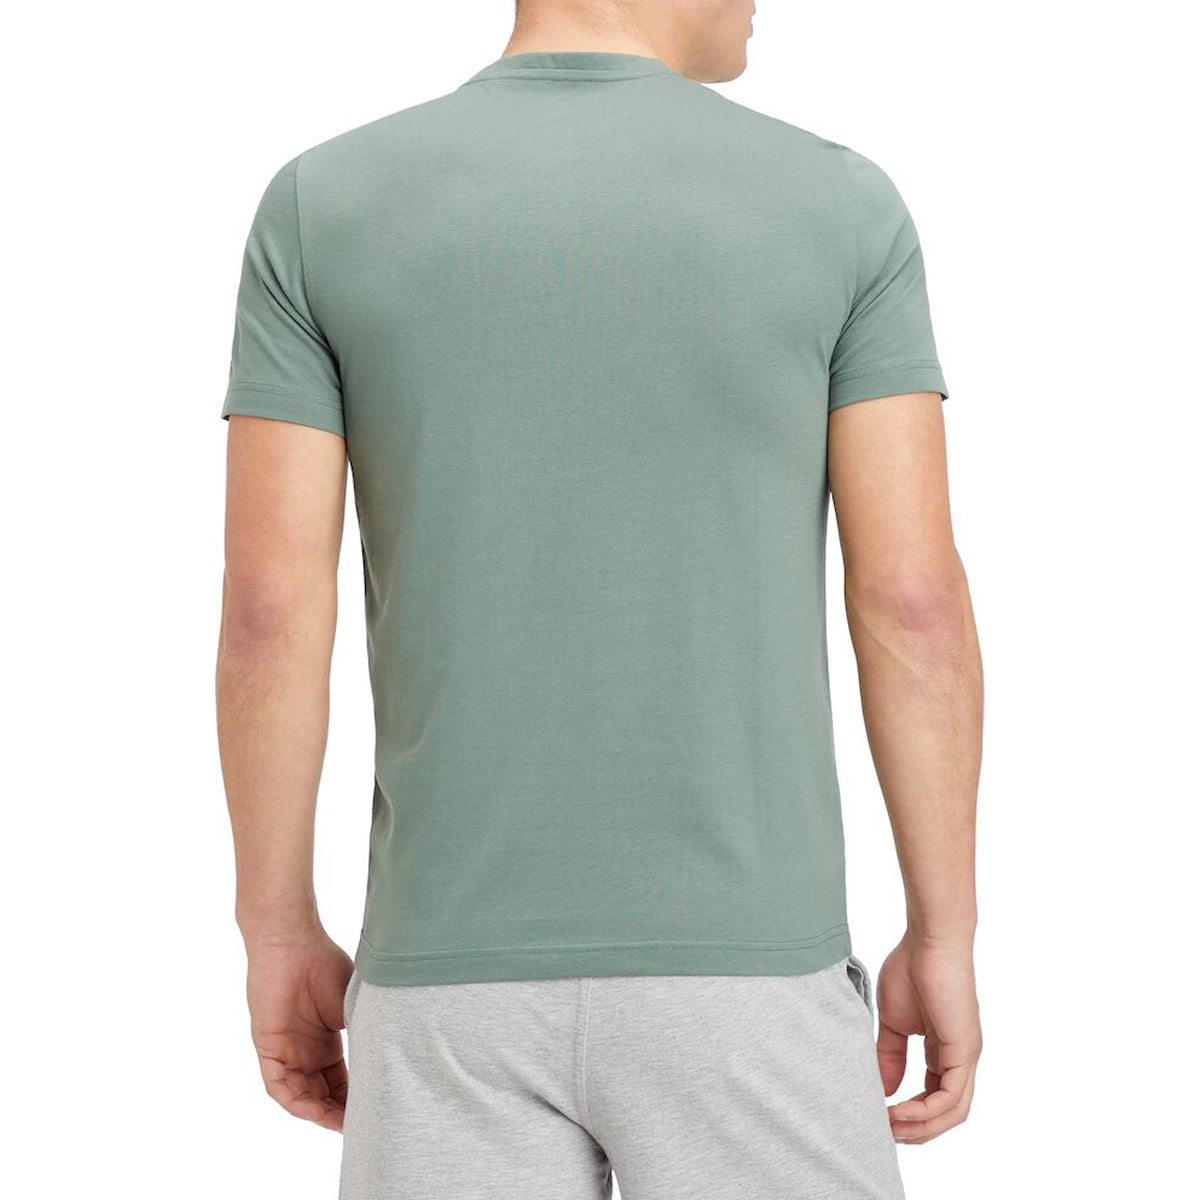 Energetics Garek Lifestyle T-Shirt, Dark Green